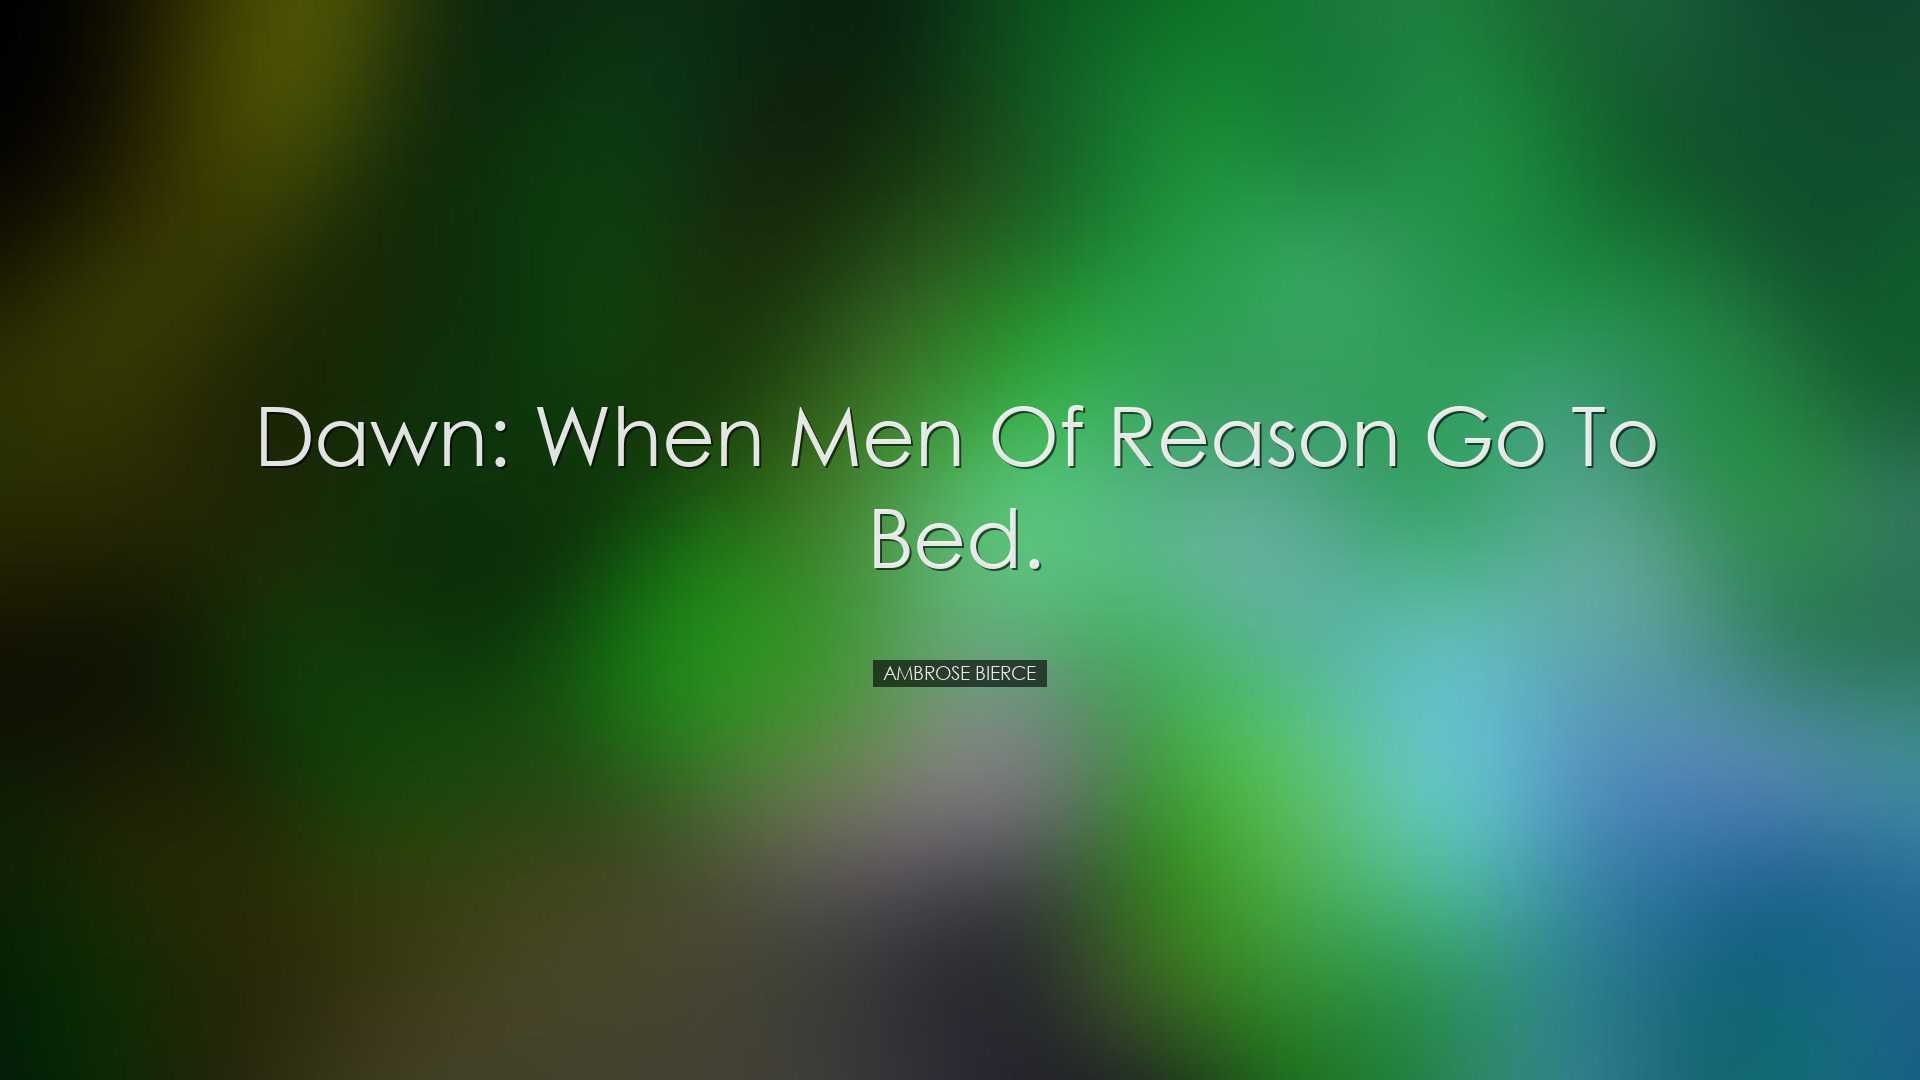 Dawn: When men of reason go to bed. - Ambrose Bierce